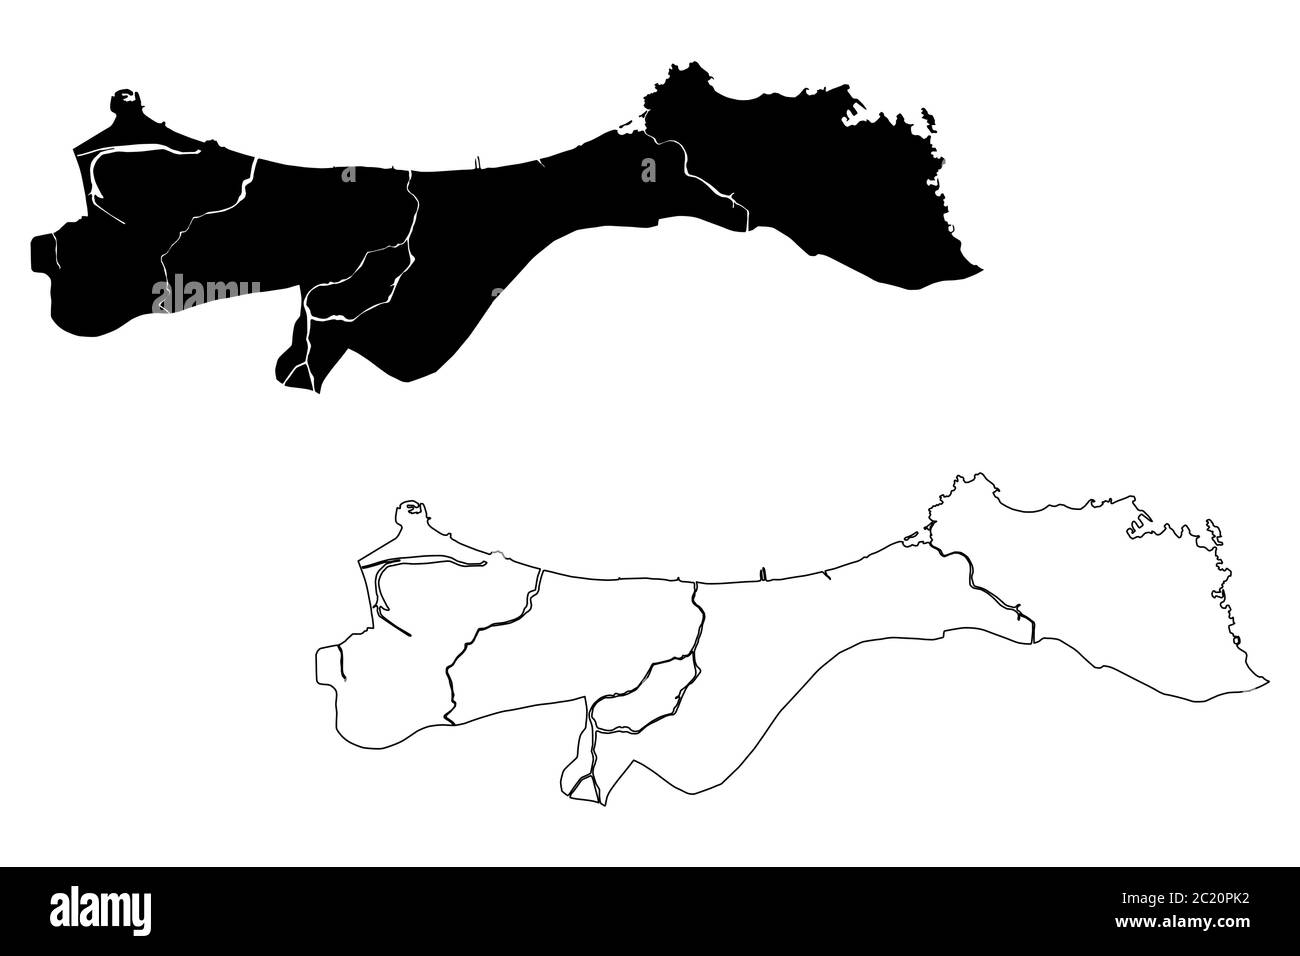 Muscat City (Sultanat von Oman) Karte Vektor Illustration, scribble Skizze Stadt von Muscat Karte Stock Vektor